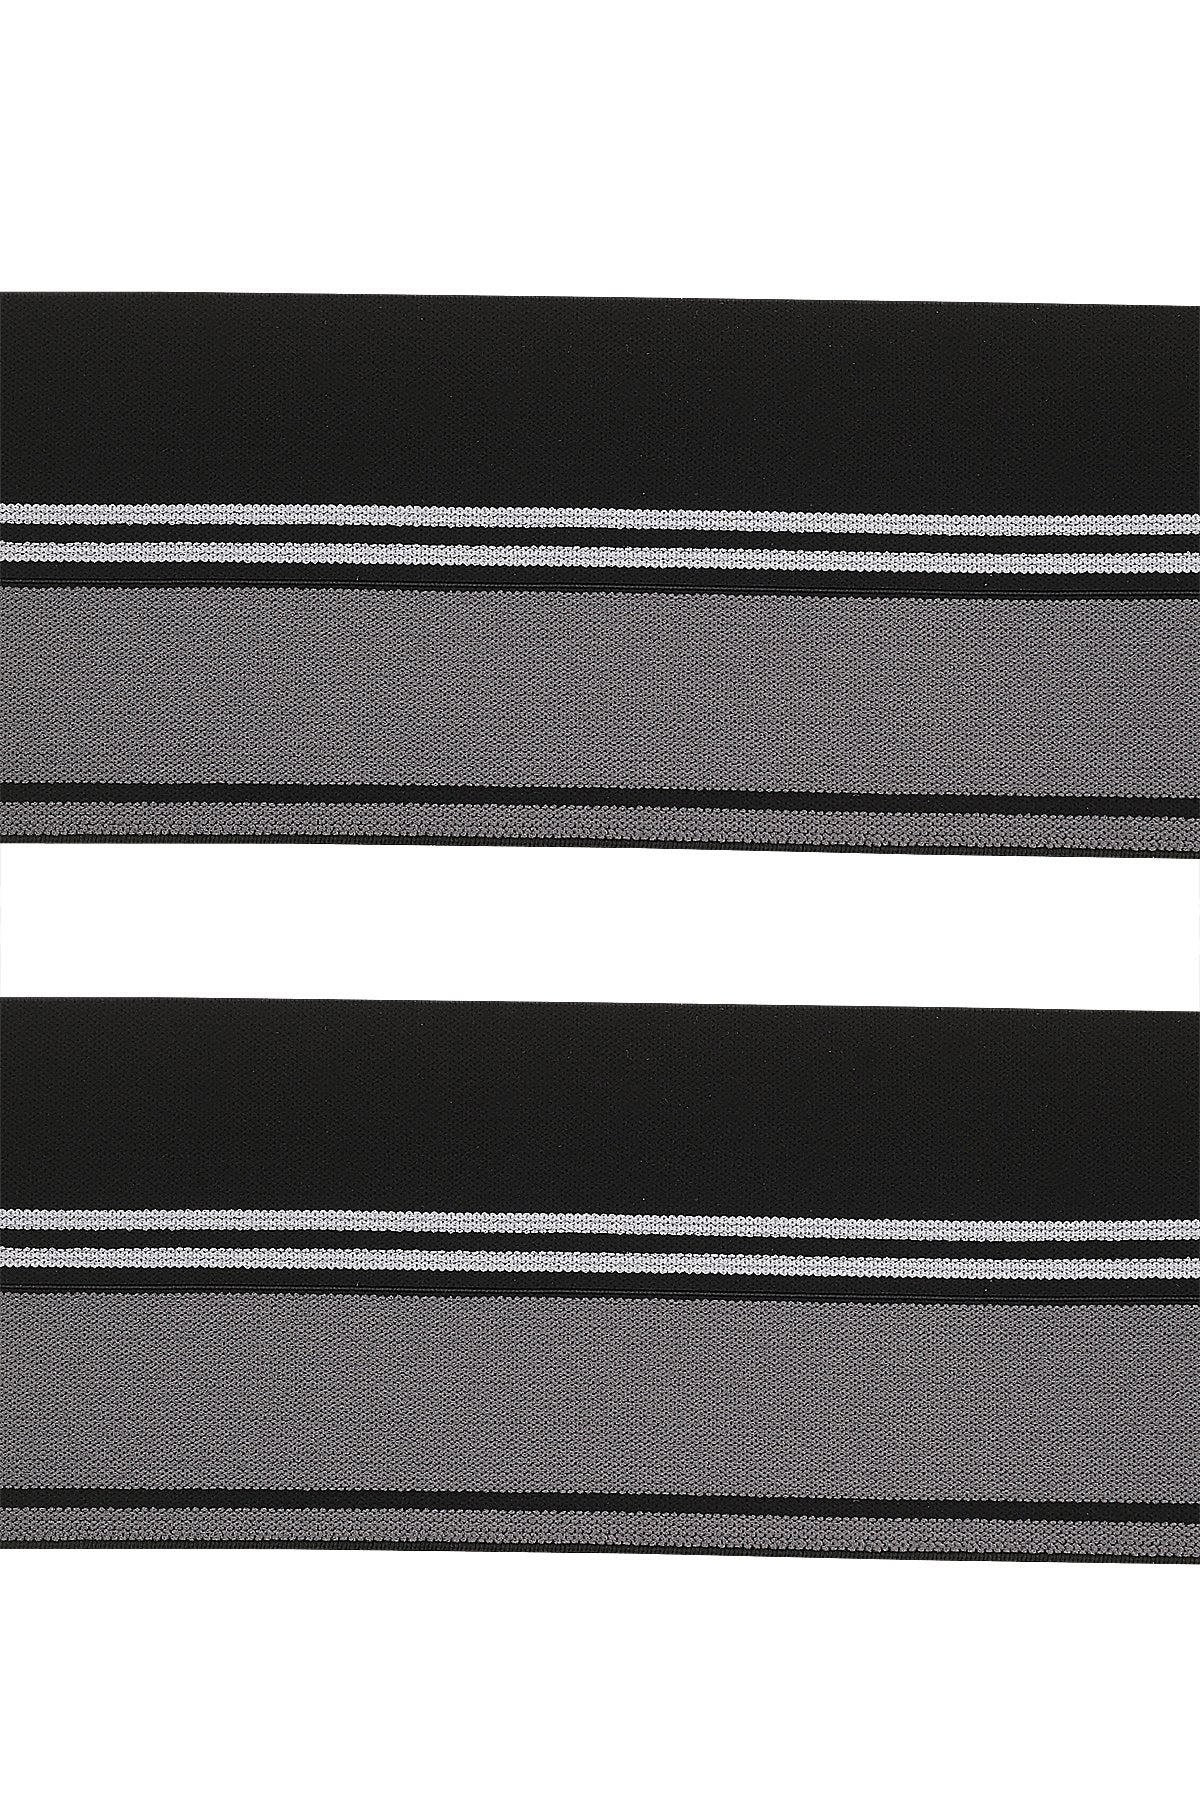 Black & Grey Knit Elastic Webbing Strap Band Strong Stretchable Elastic